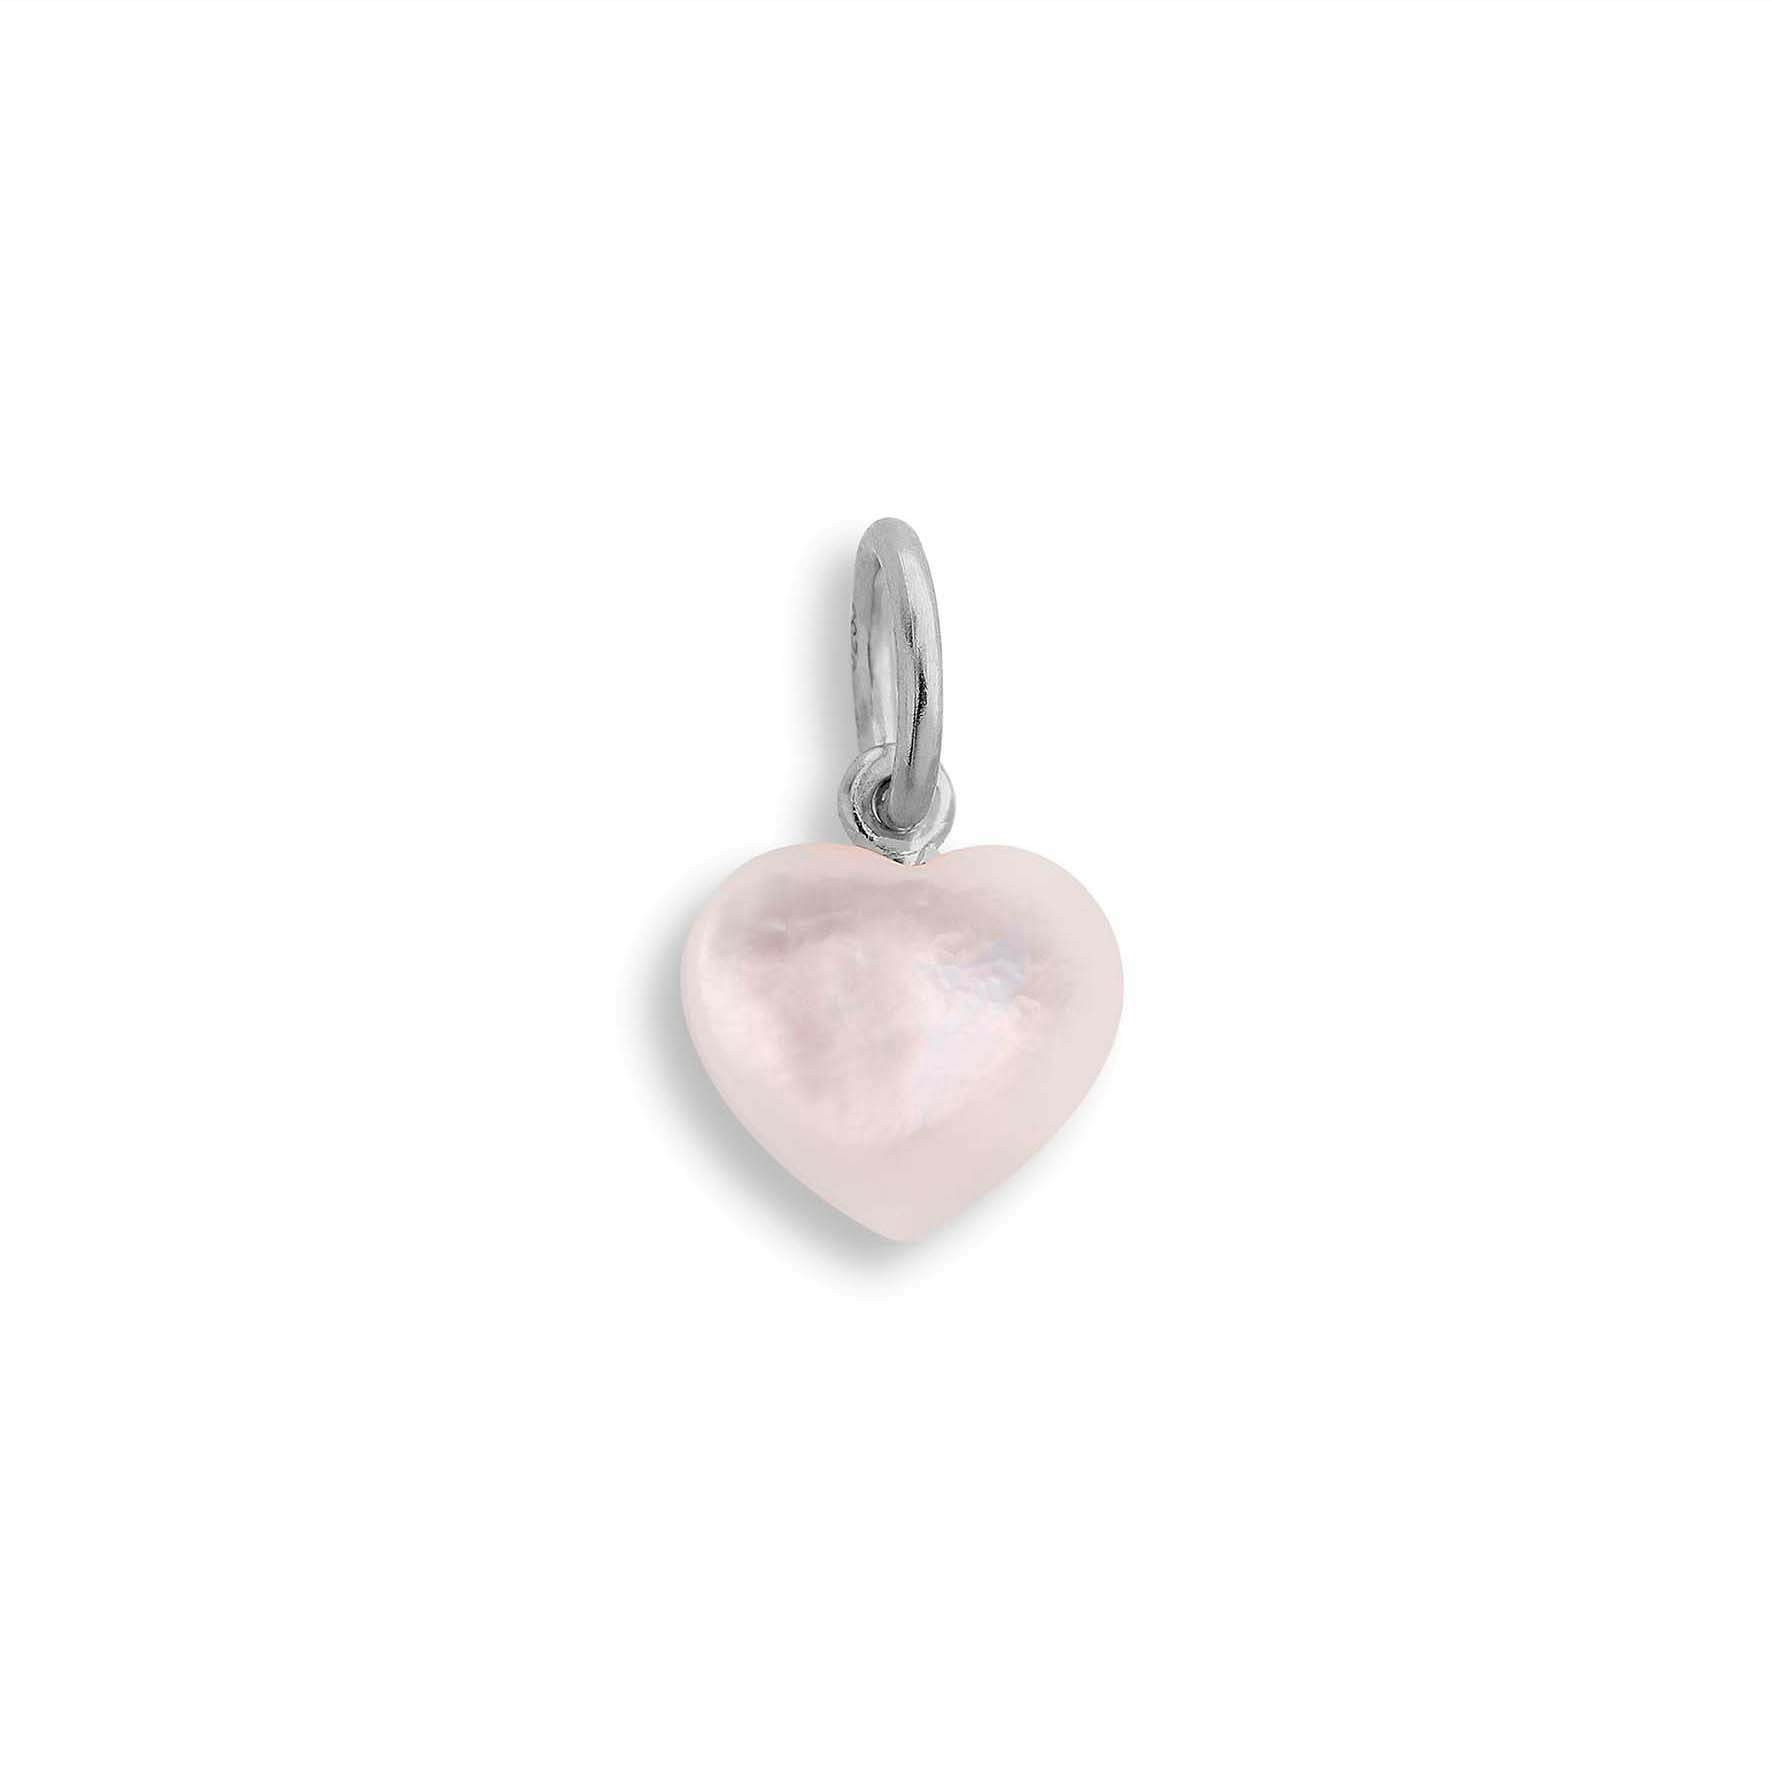 Small Souvenir Heart fra Jane Kønig i Sølv Sterling 925